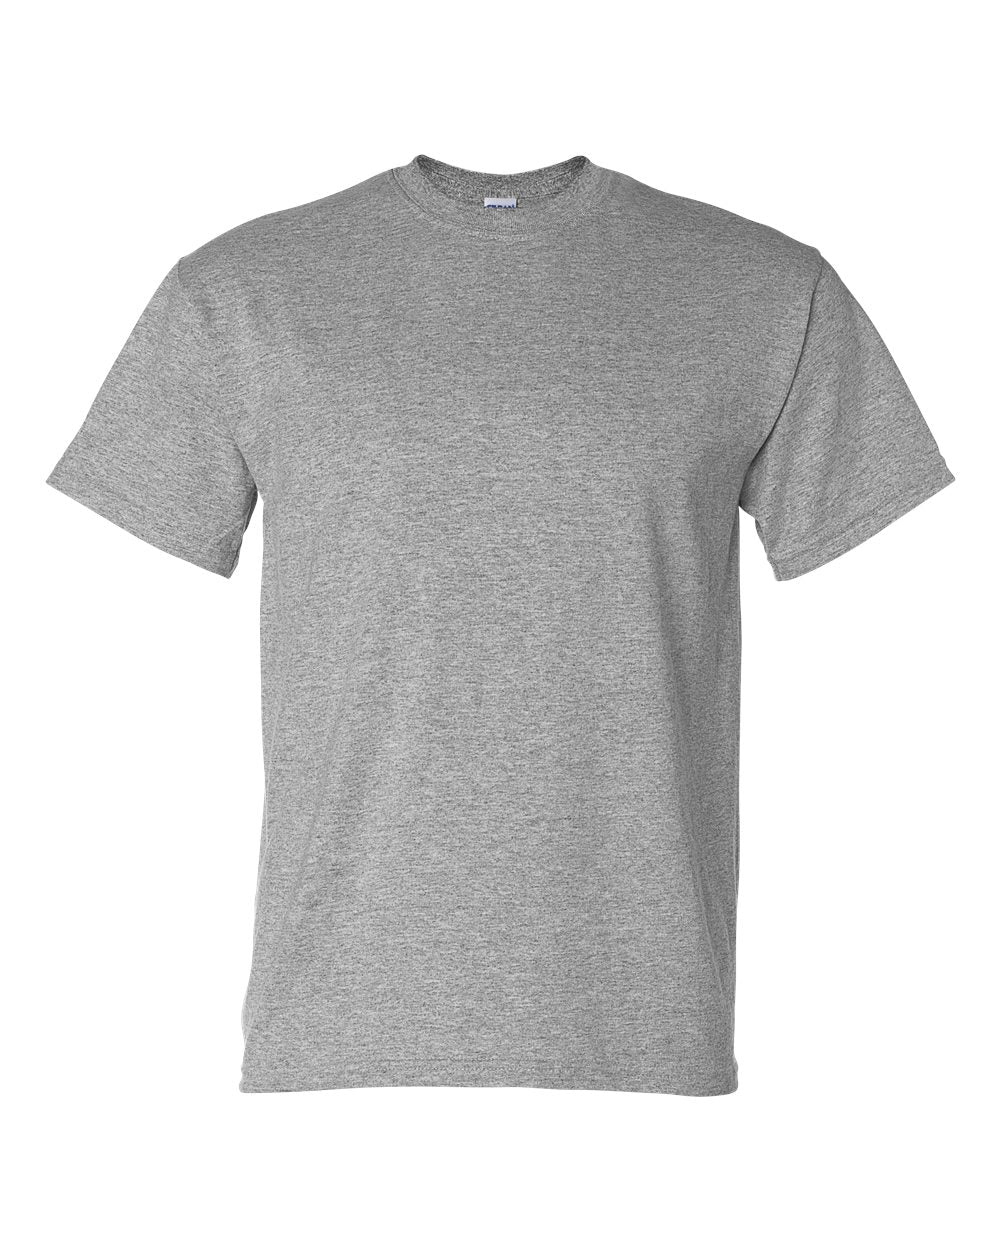 Gildan 8000 DryBlend T-Shirt :: Sport Grey, Size S